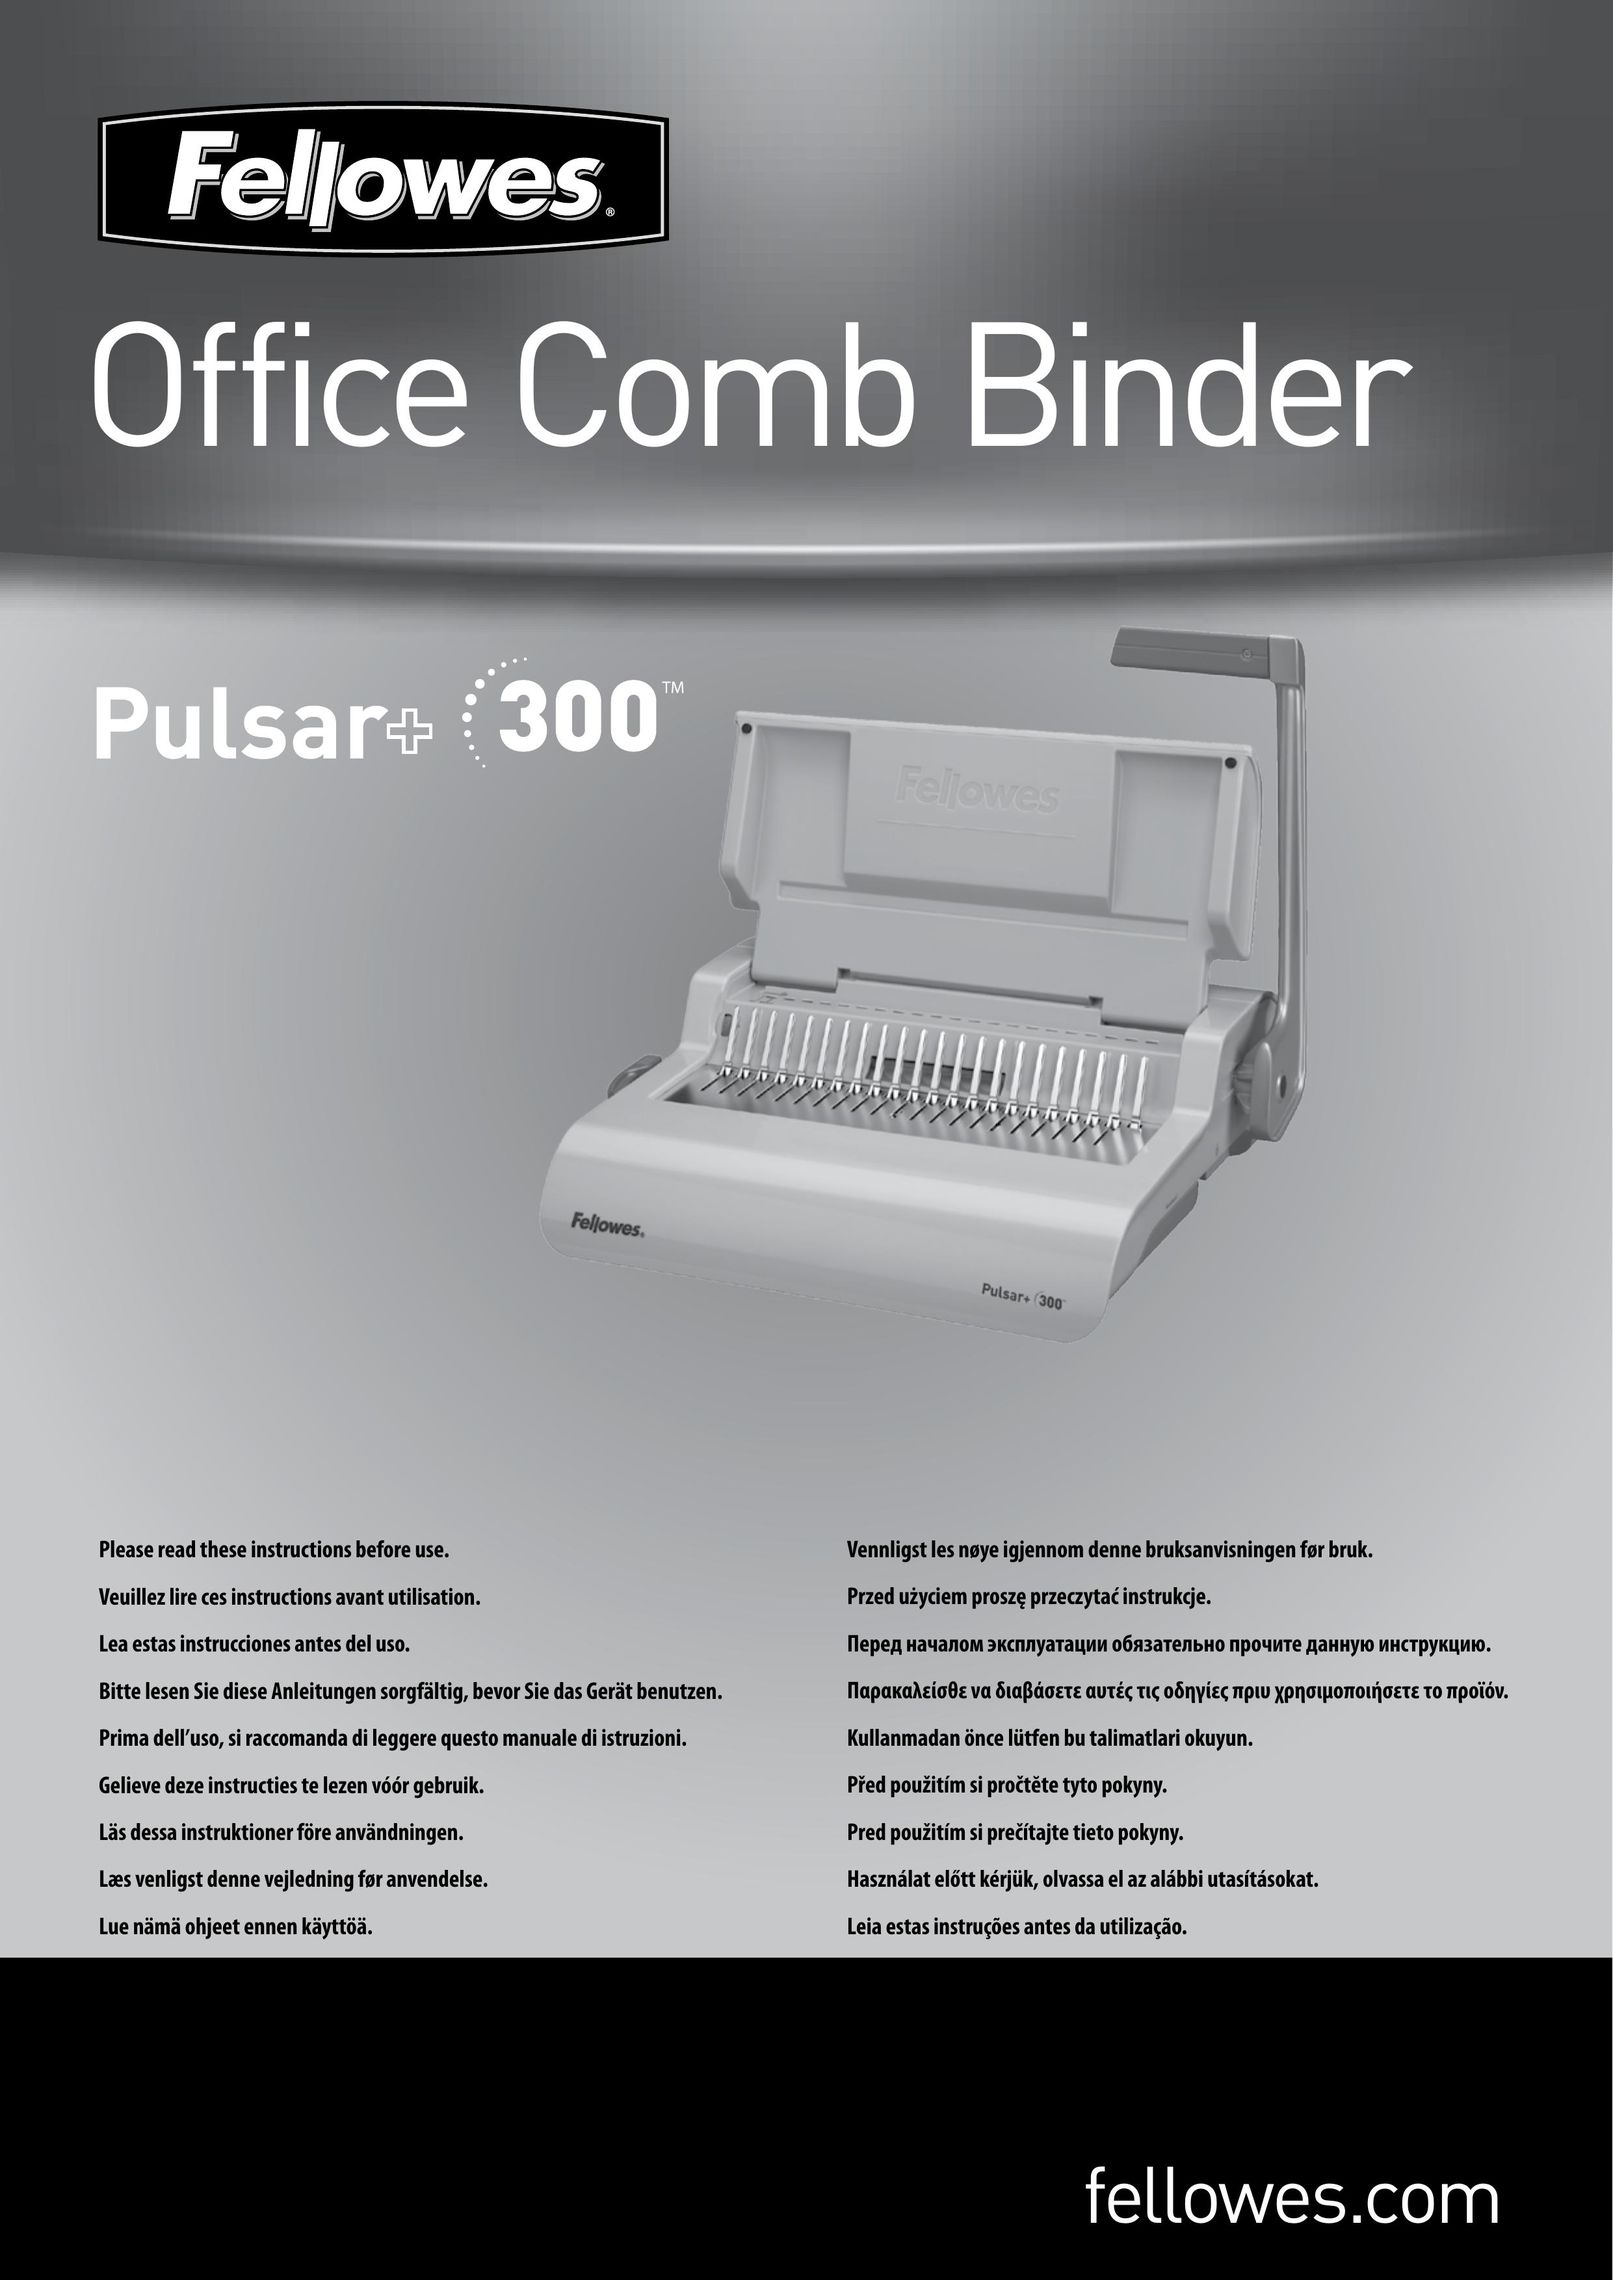 Fellowes Pulsar 300 Binding Machine User Manual